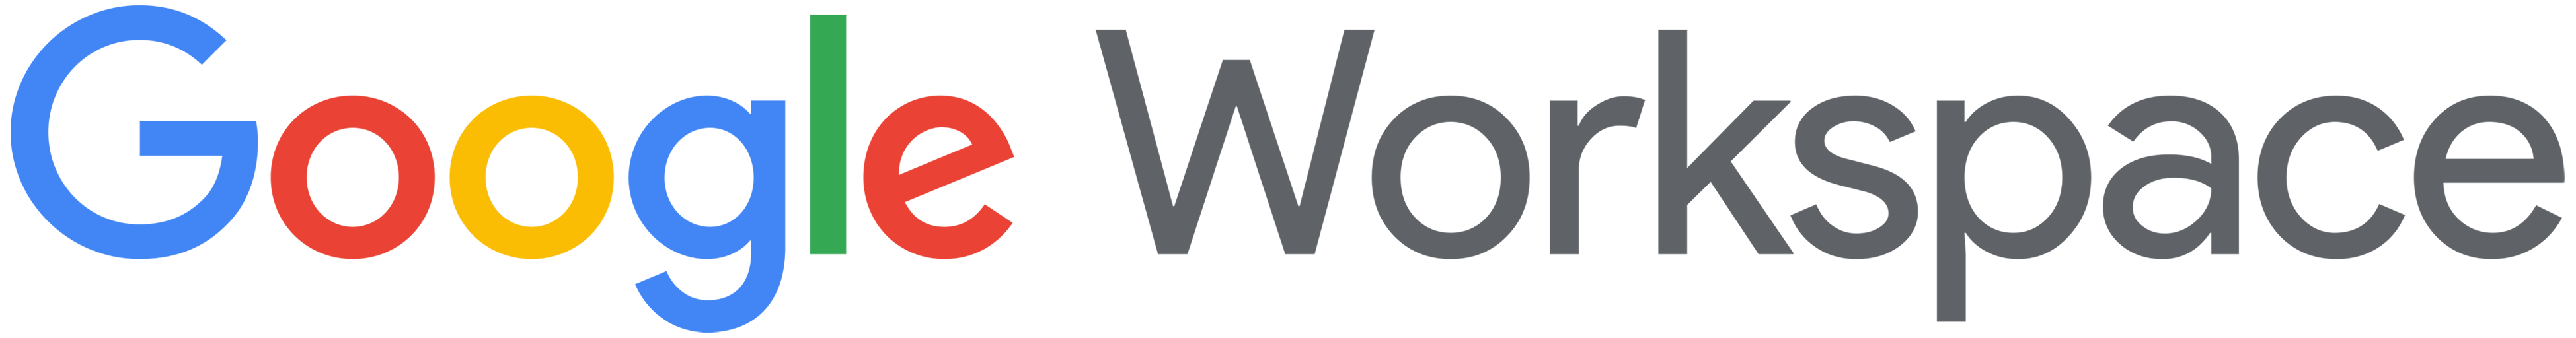 Google Workspace Logo 